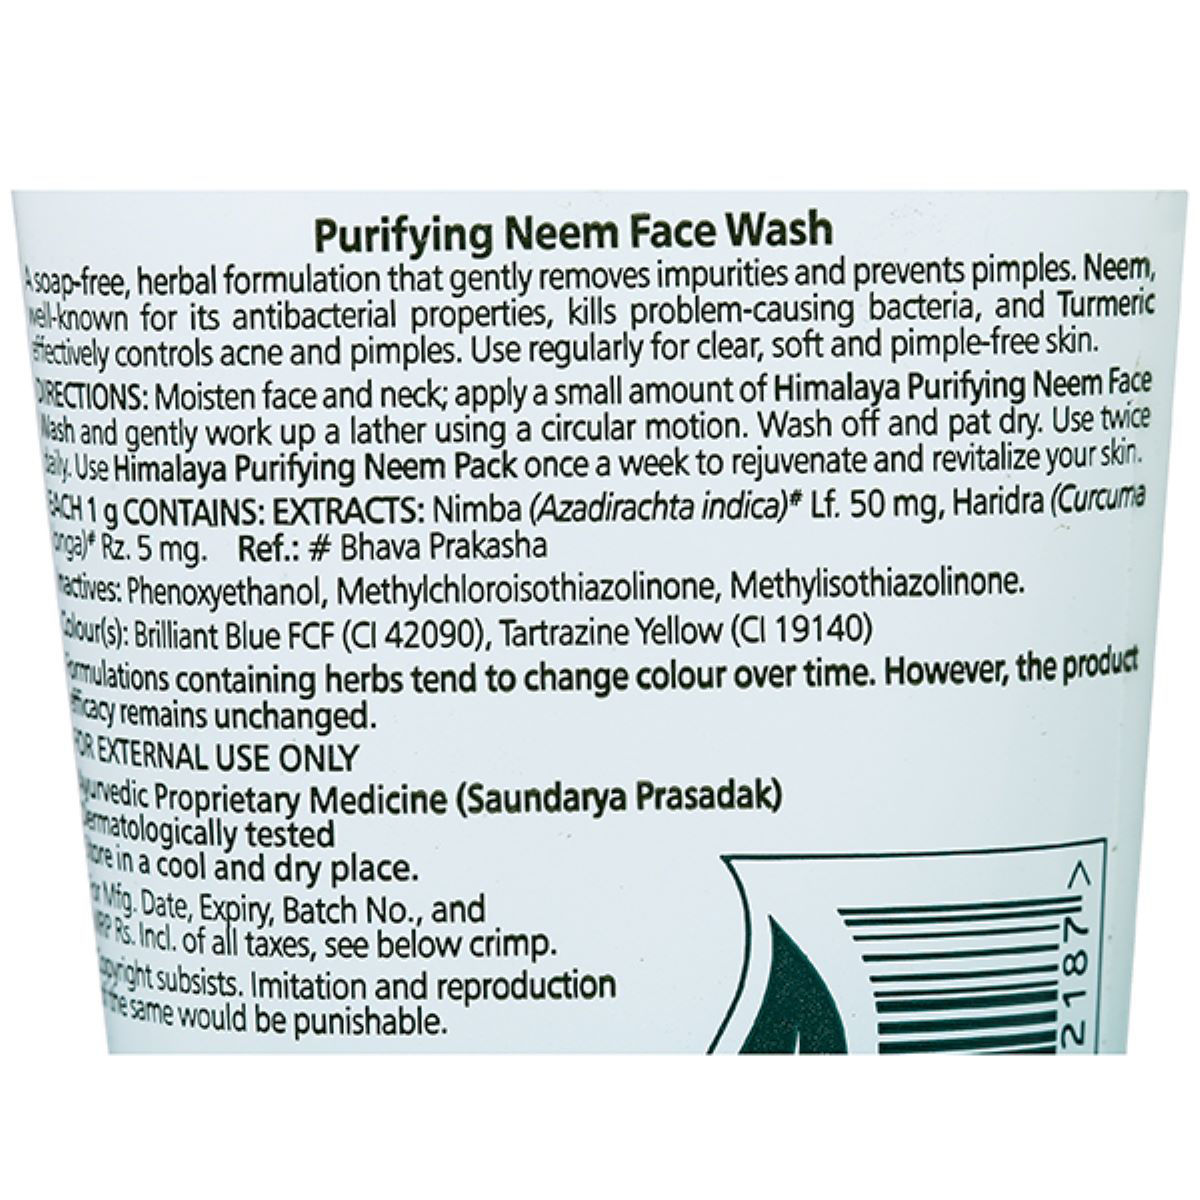 Himalaya Purifying Neem Face Wash, 50 ml, Pack of 1 